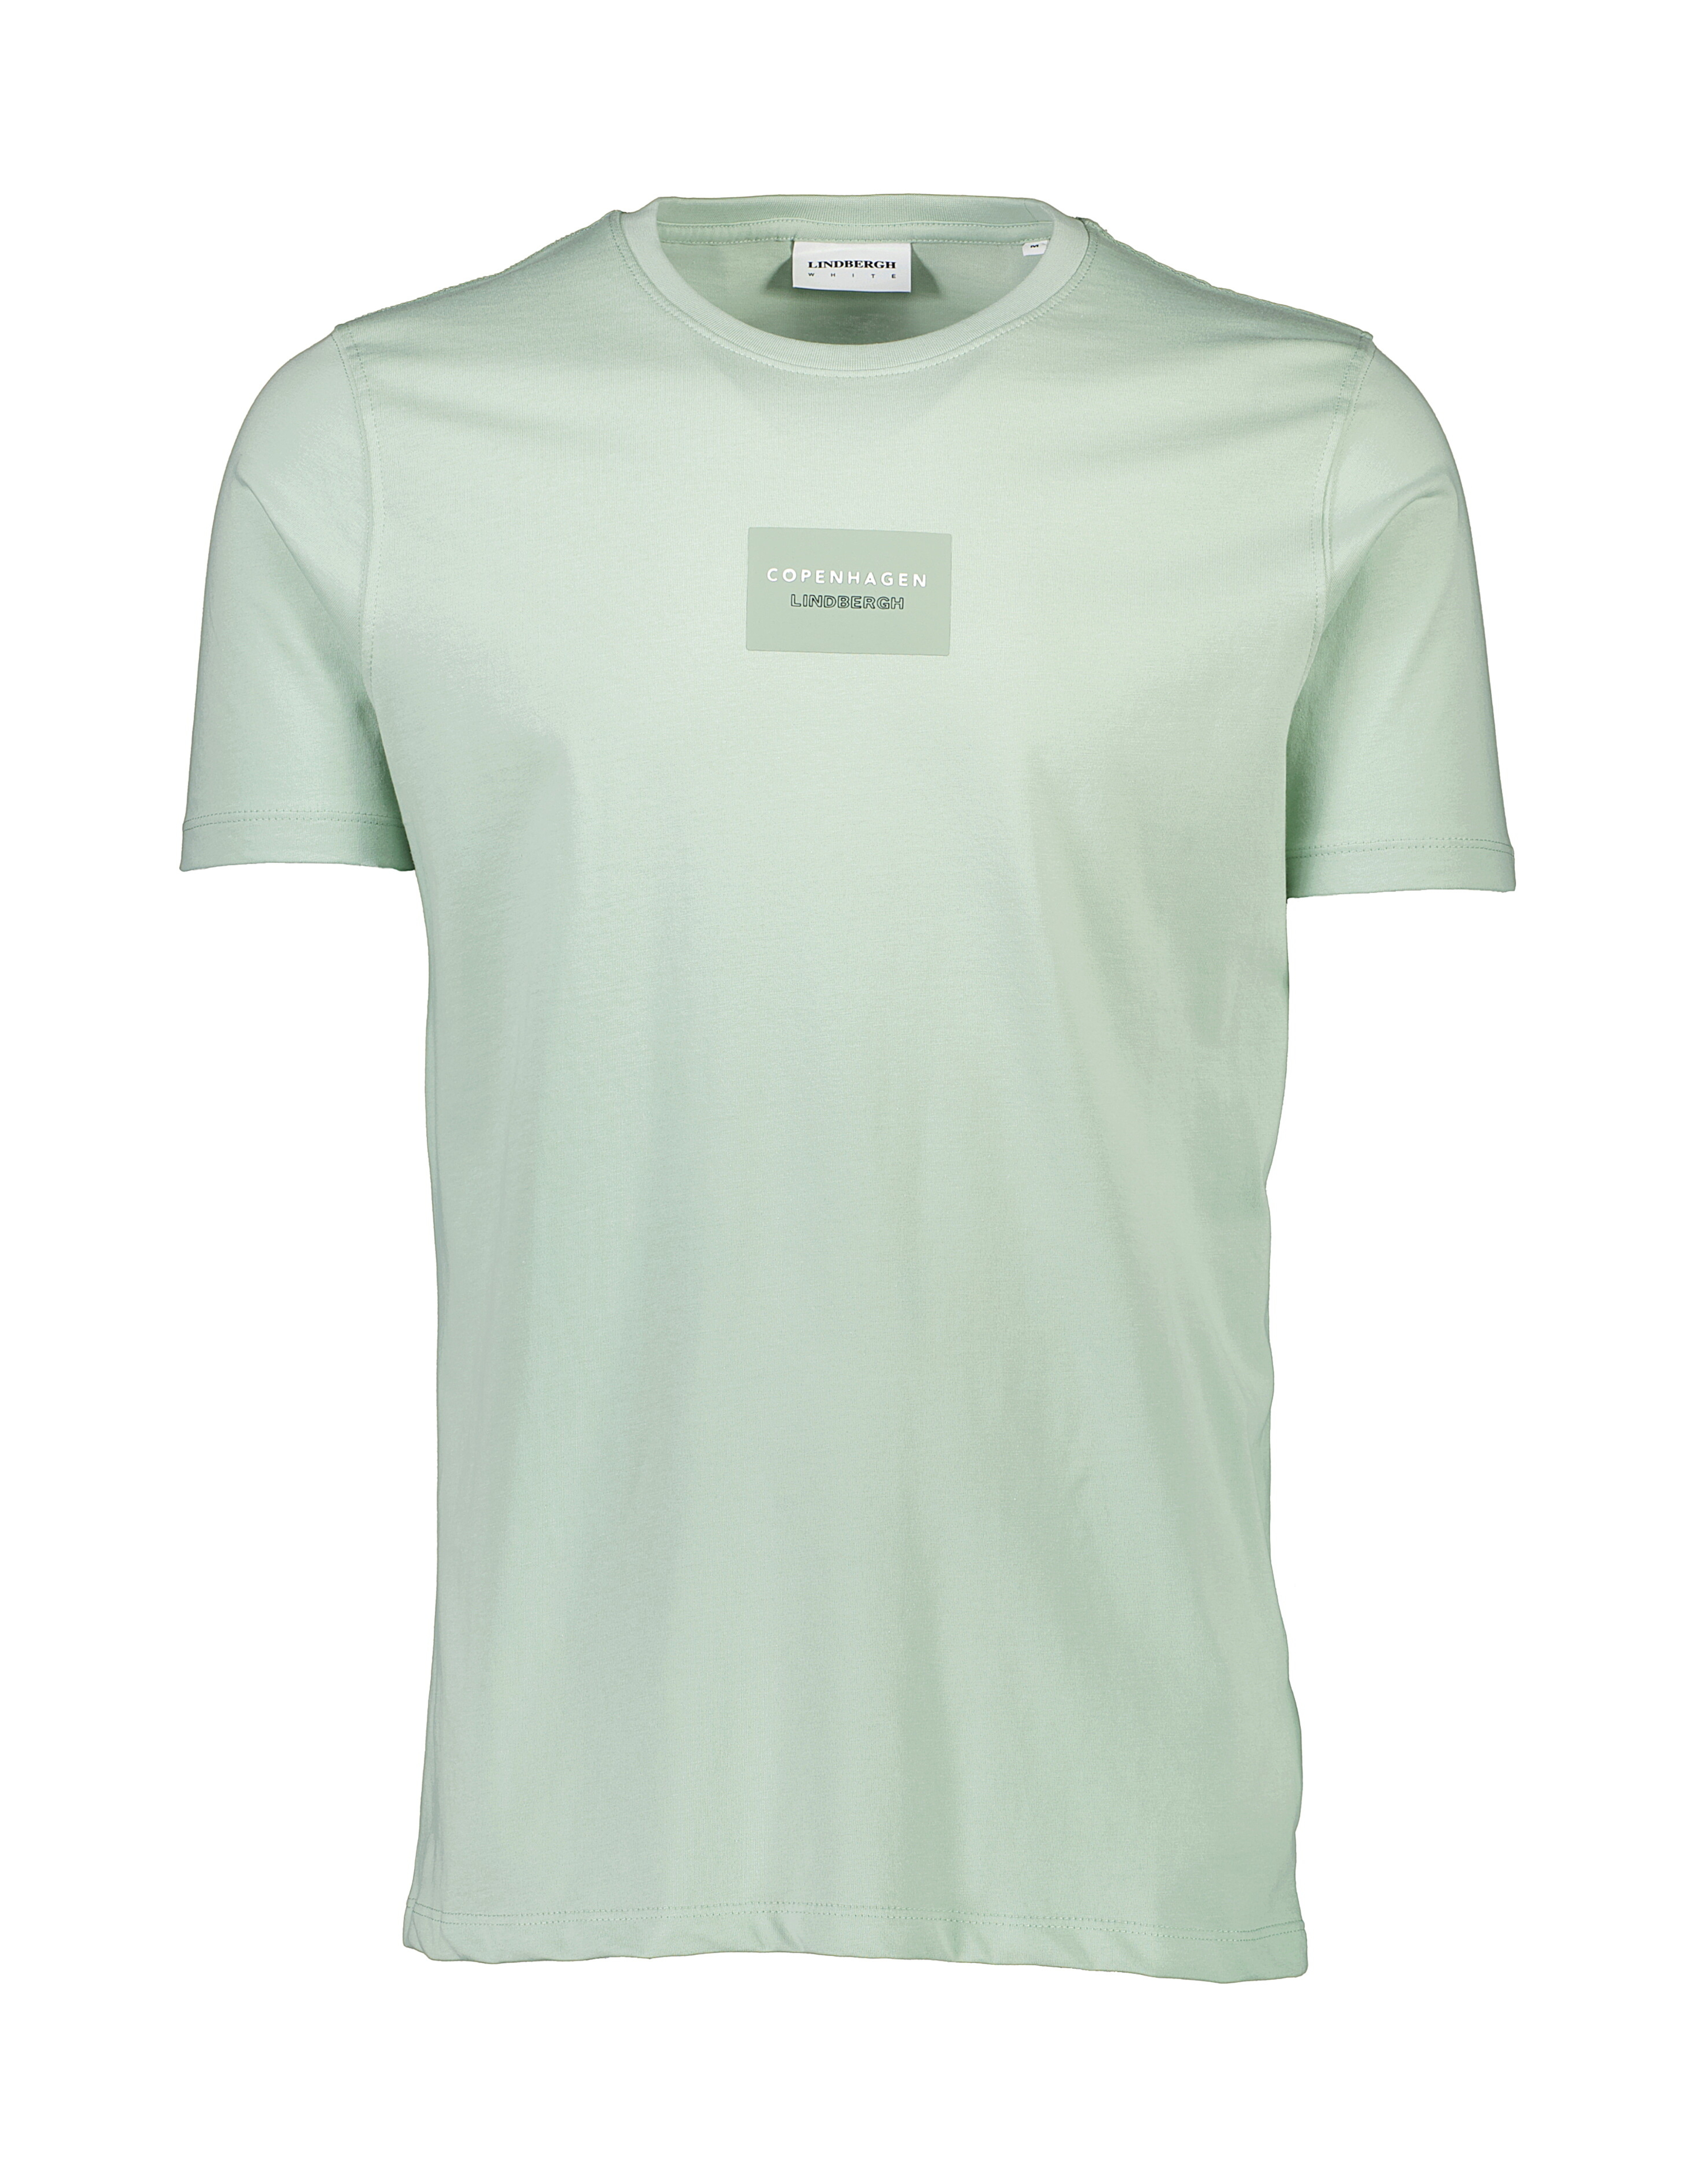 Lindbergh T-Shirt grün / dusty mint